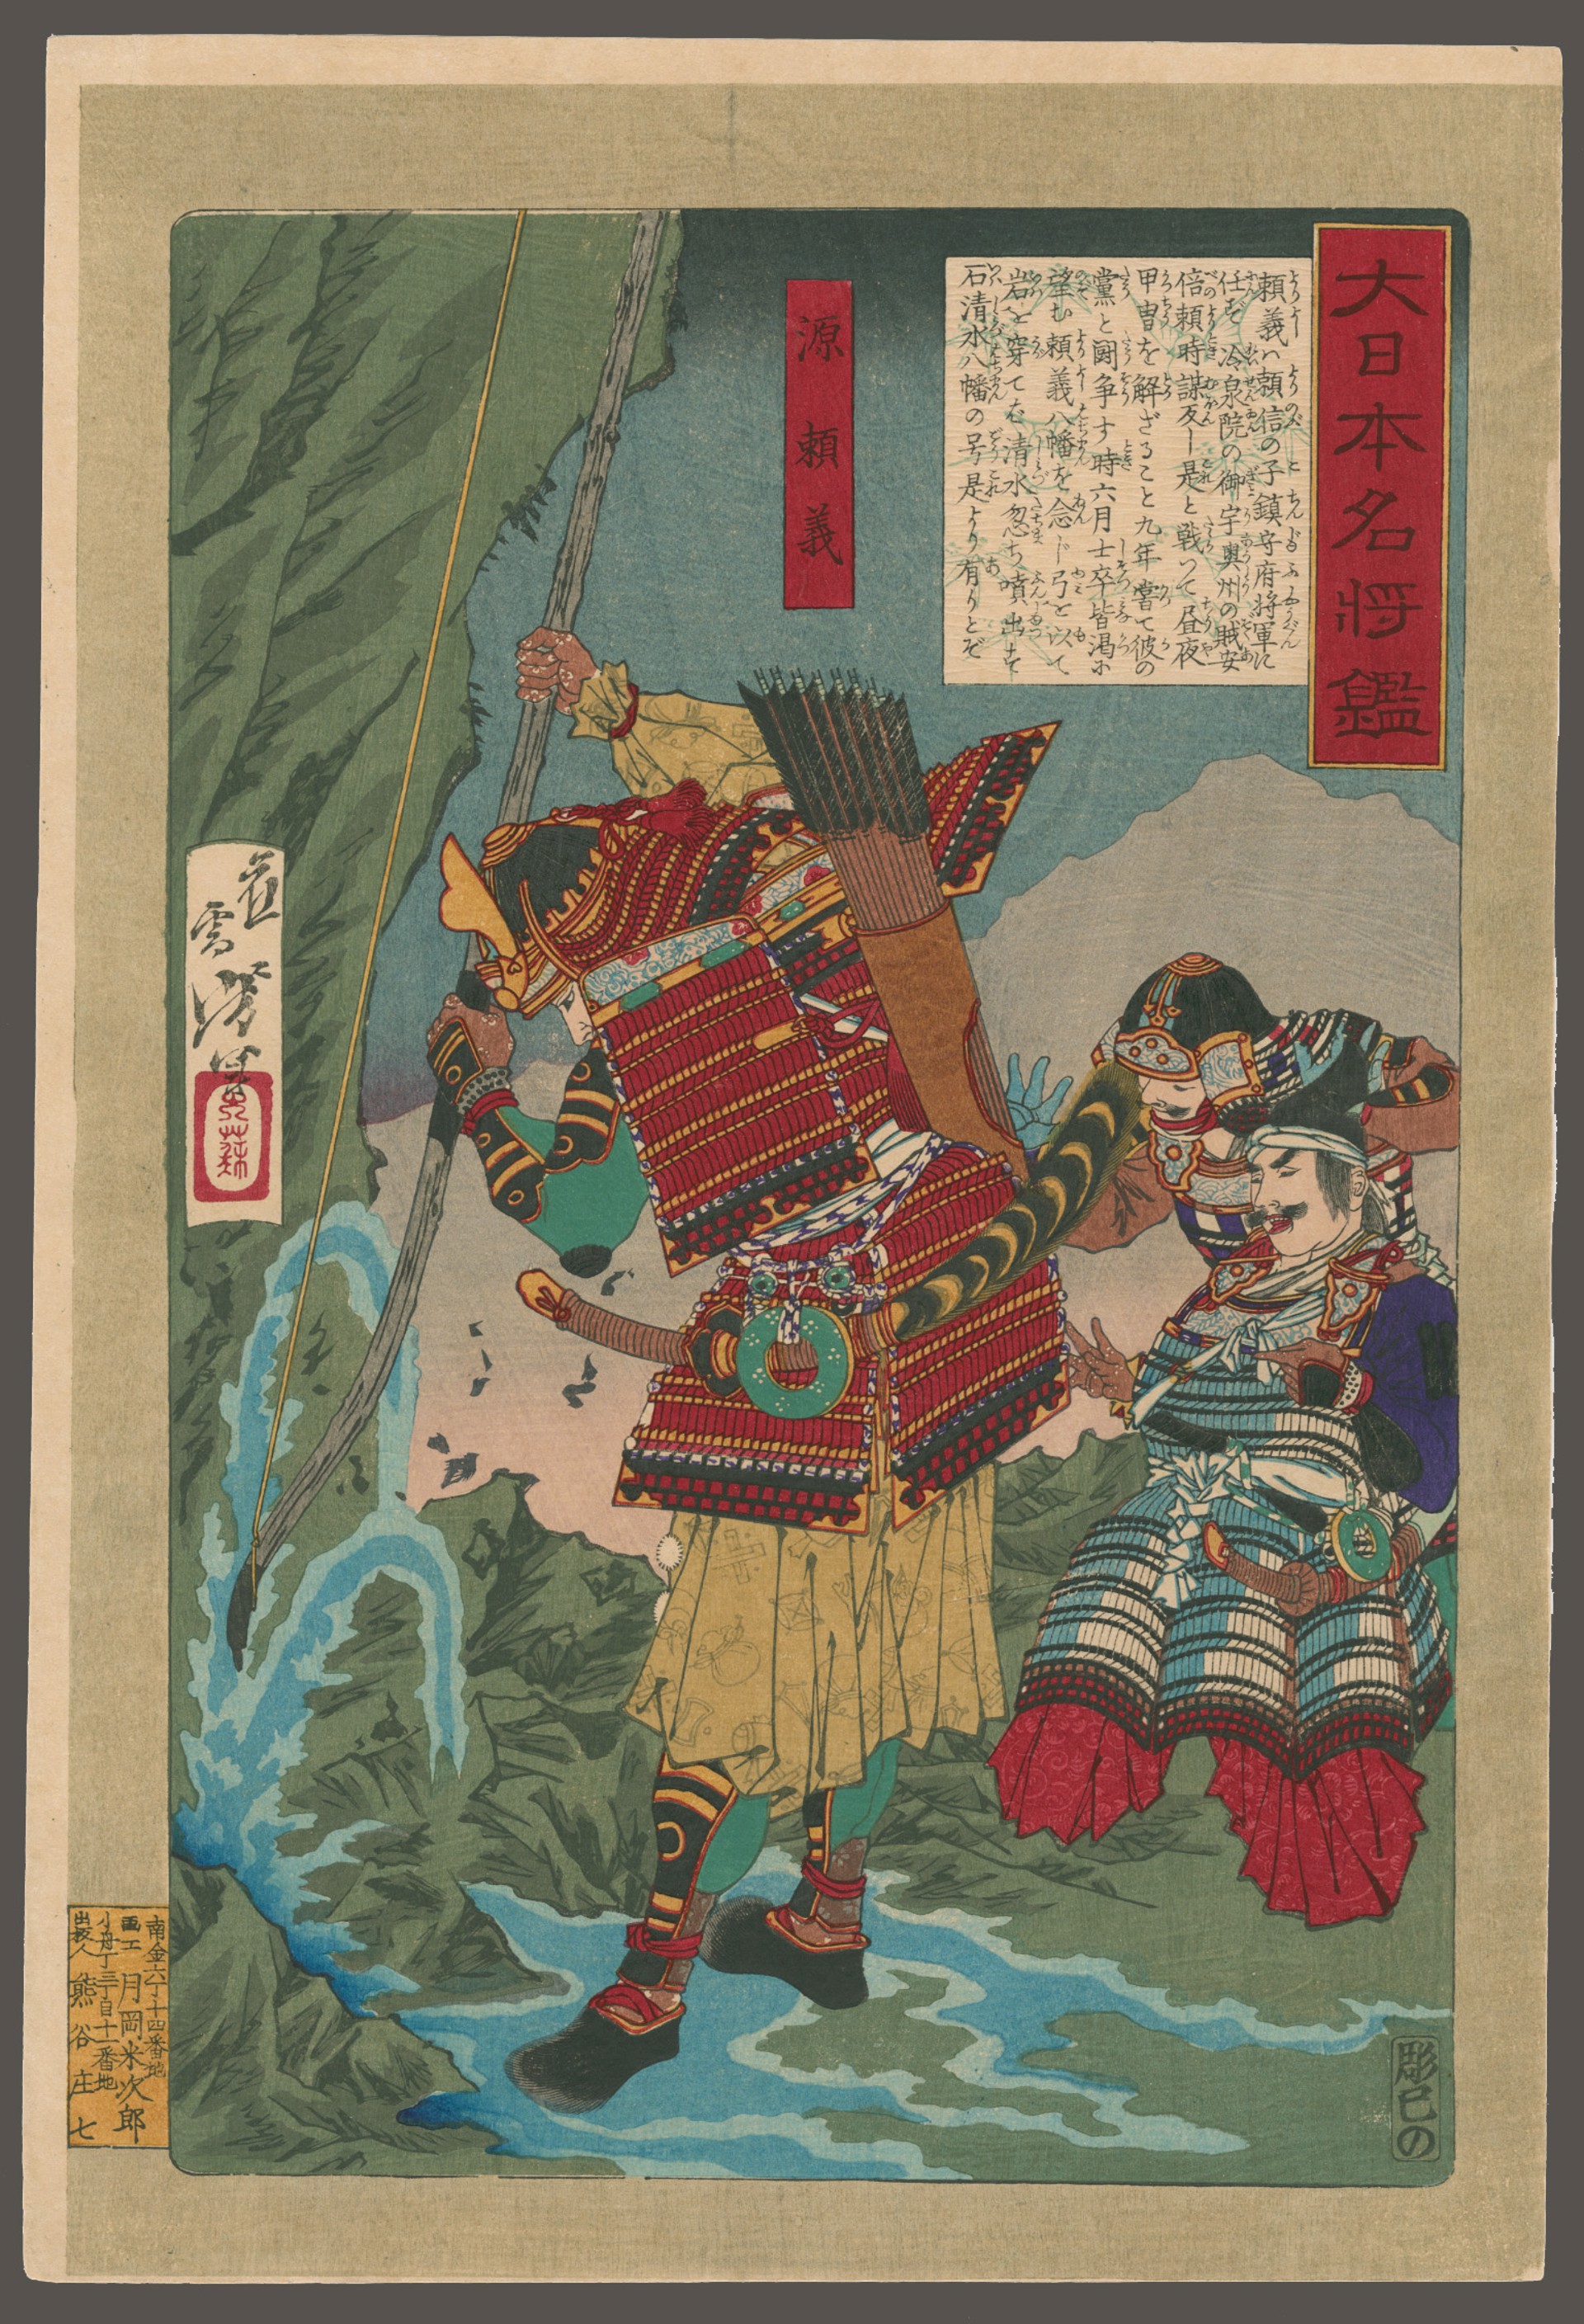 Minamoto no Yoritomo Finds Water by Striking his Bow. Mirror of Famous Generals by Yoshitoshi